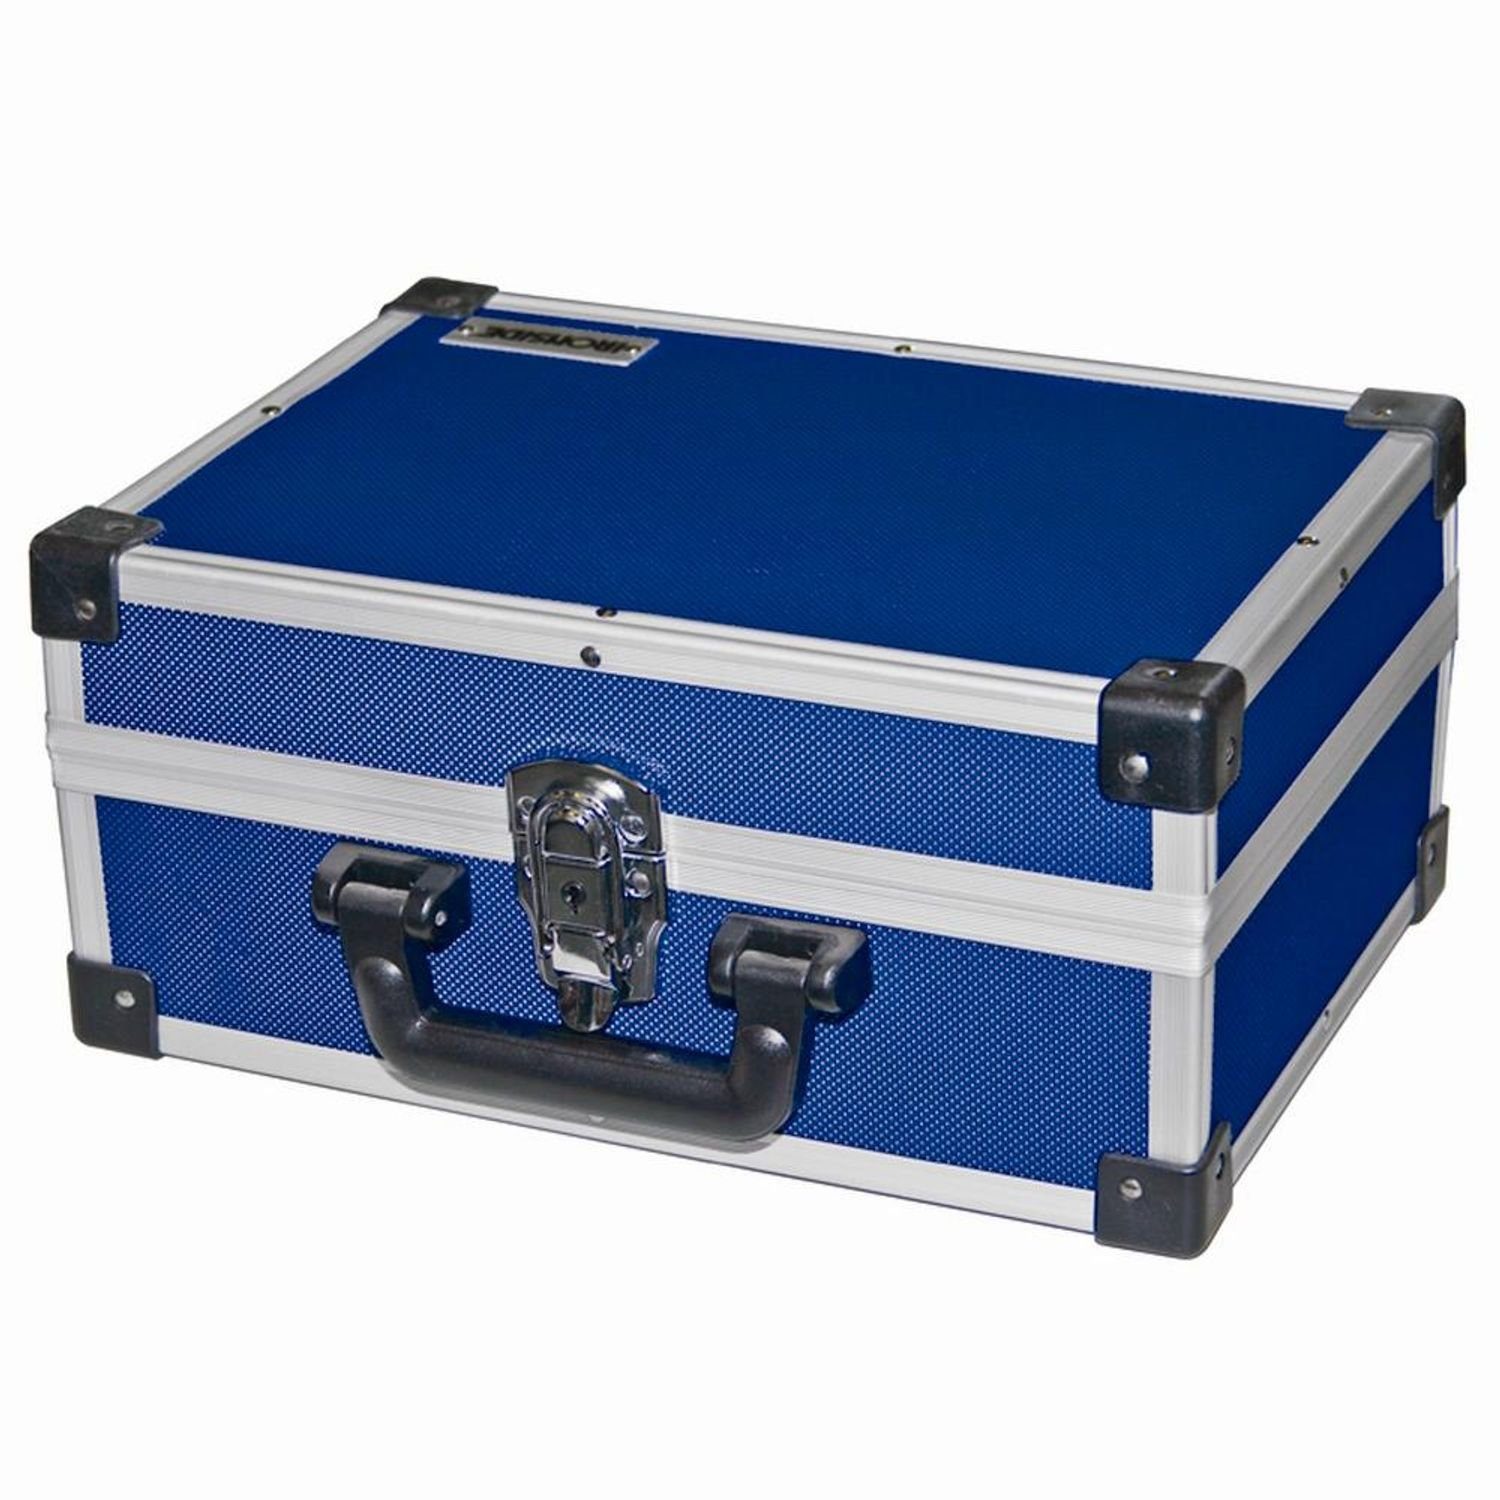 Alu Werkzeugkoffer 330x230x150mm Wer blau IRONSIDE Werkzeugkasten Werkzeugkoffer Werkzeugkiste